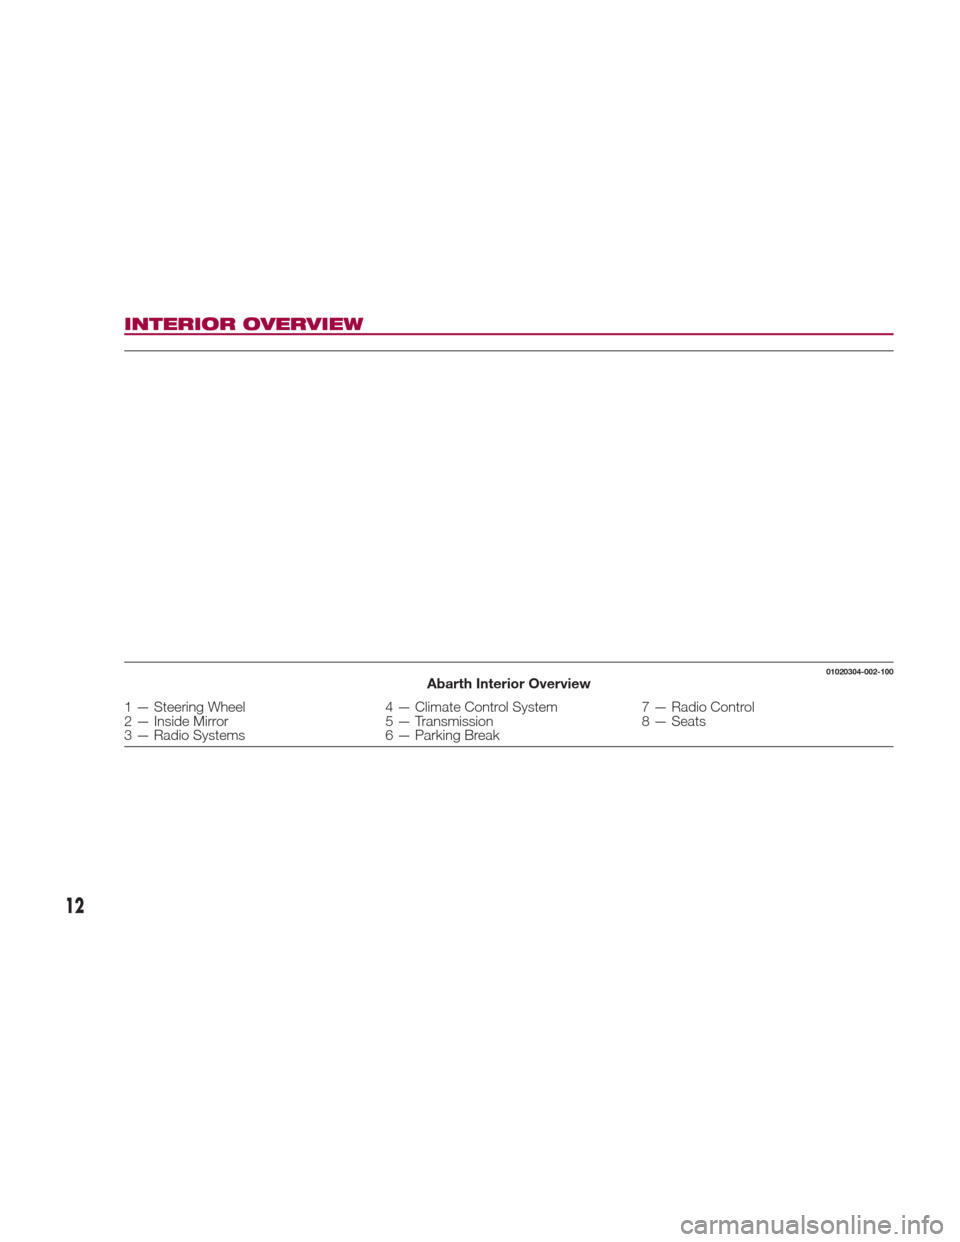 FIAT 124 SPIDER ABARTH 2017 2.G Owners Manual INTERIOR OVERVIEW
01020304-002-100Abarth Interior Overview
1 — Steering Wheel4 — Climate Control System7 — Radio Control
2 — Inside Mirror 5 — Transmission8 — Seats
3 — Radio Systems 6 �